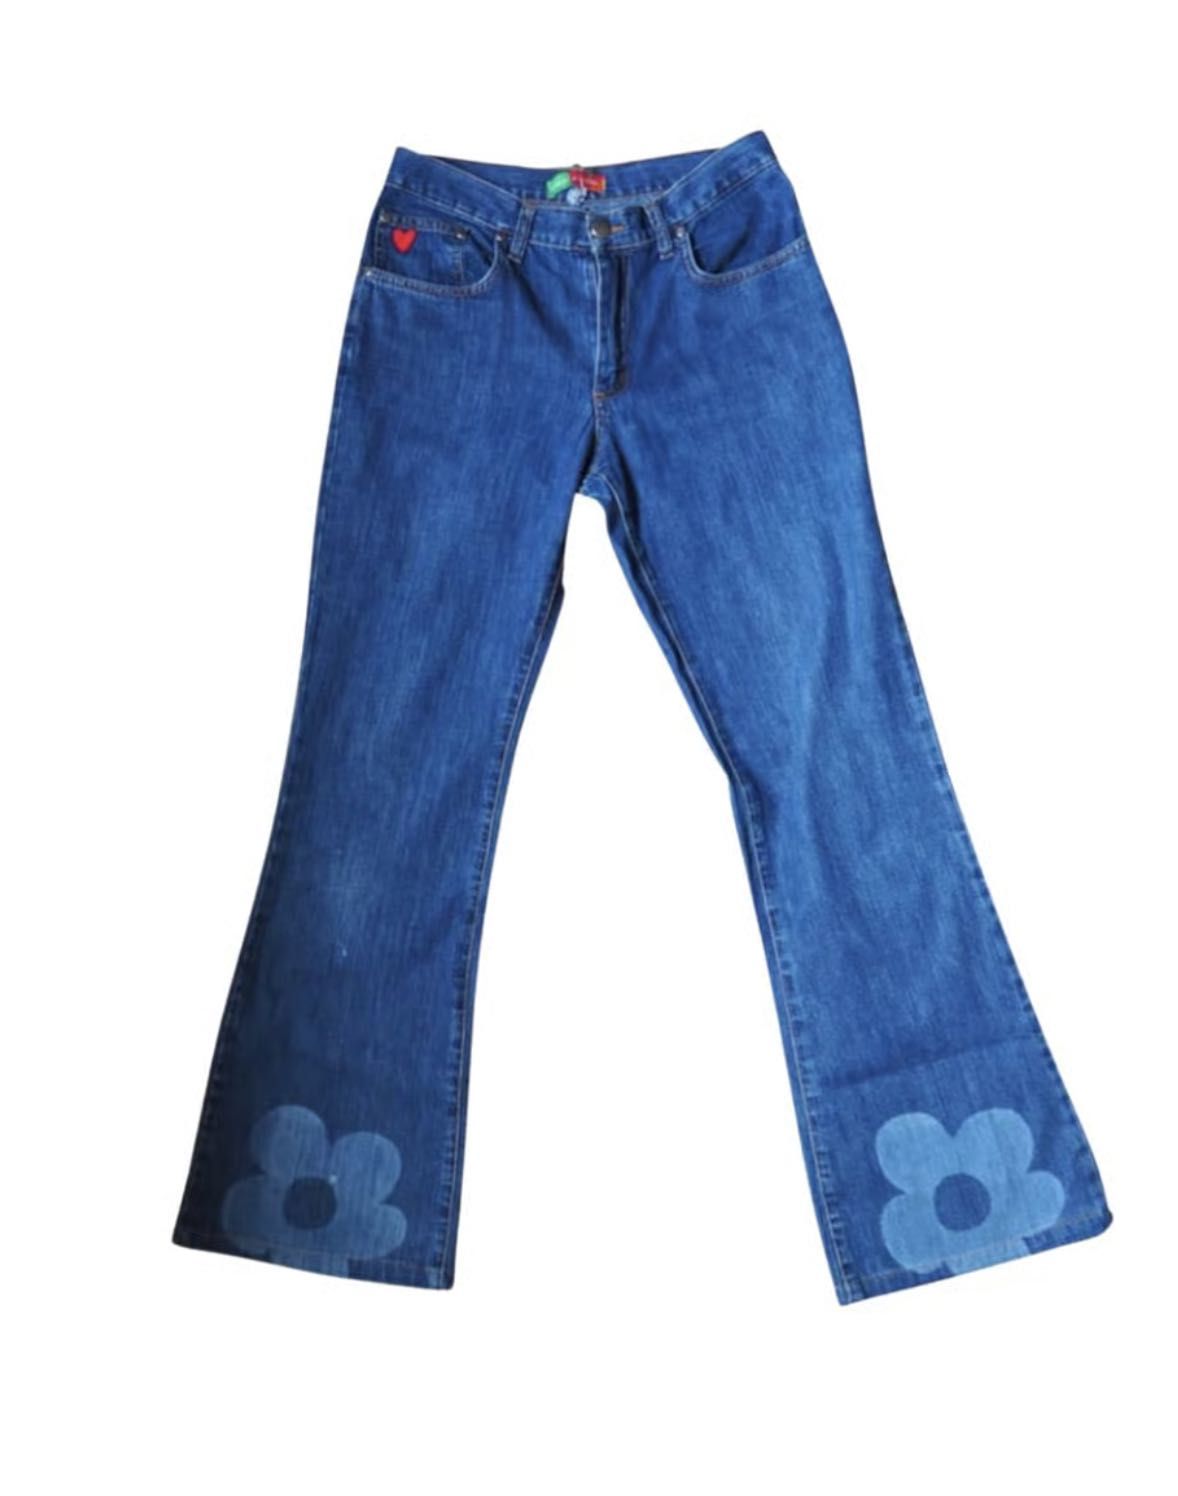 Jeans boca de sino (flare) da marca Agatha Ruiz de La Prada 2000s